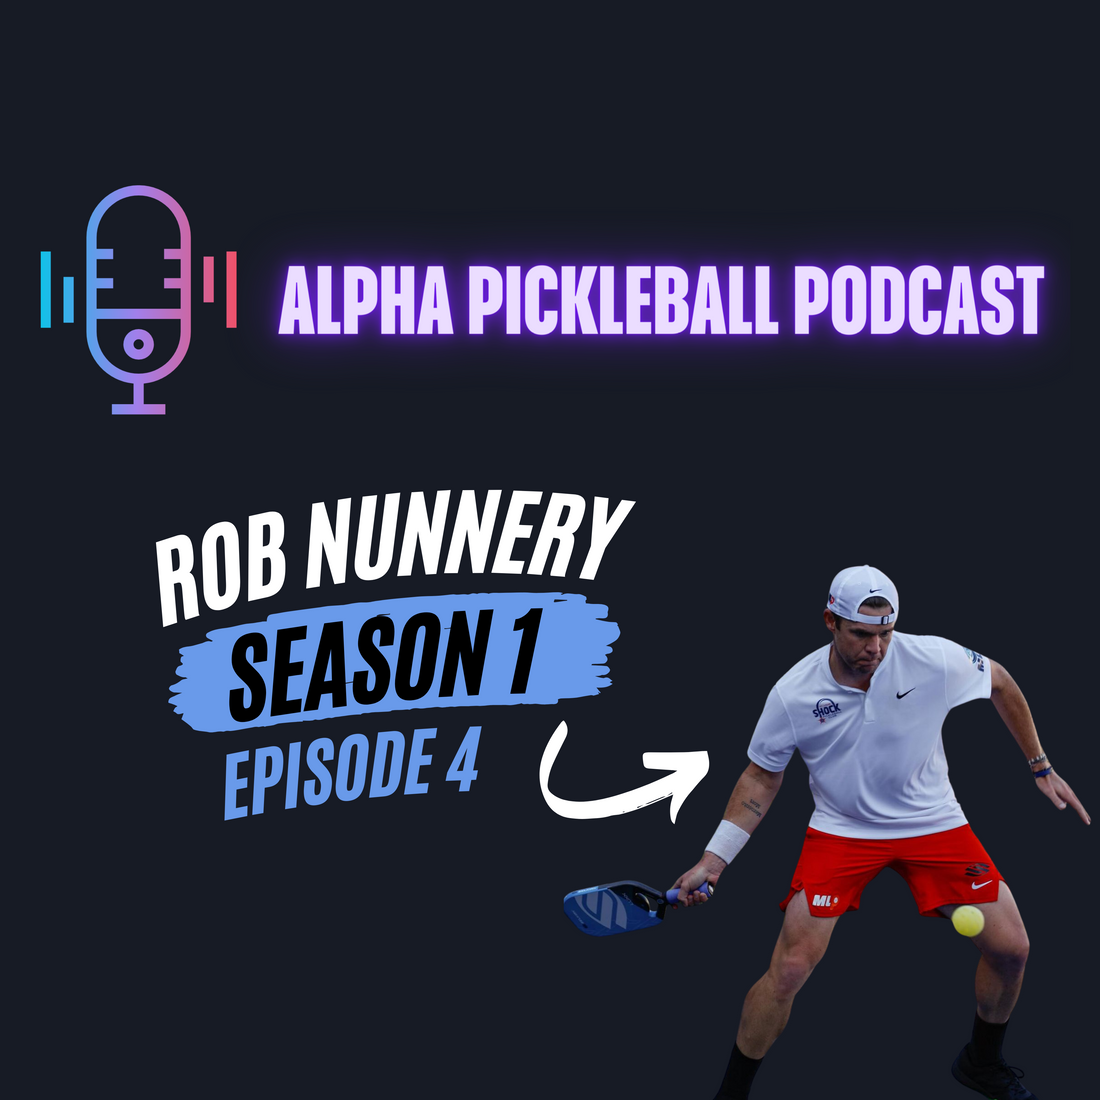 Alpha Pickleball Podcast Season 1 Episode 4 (Rob Nunnery Pickleball Pro Player)